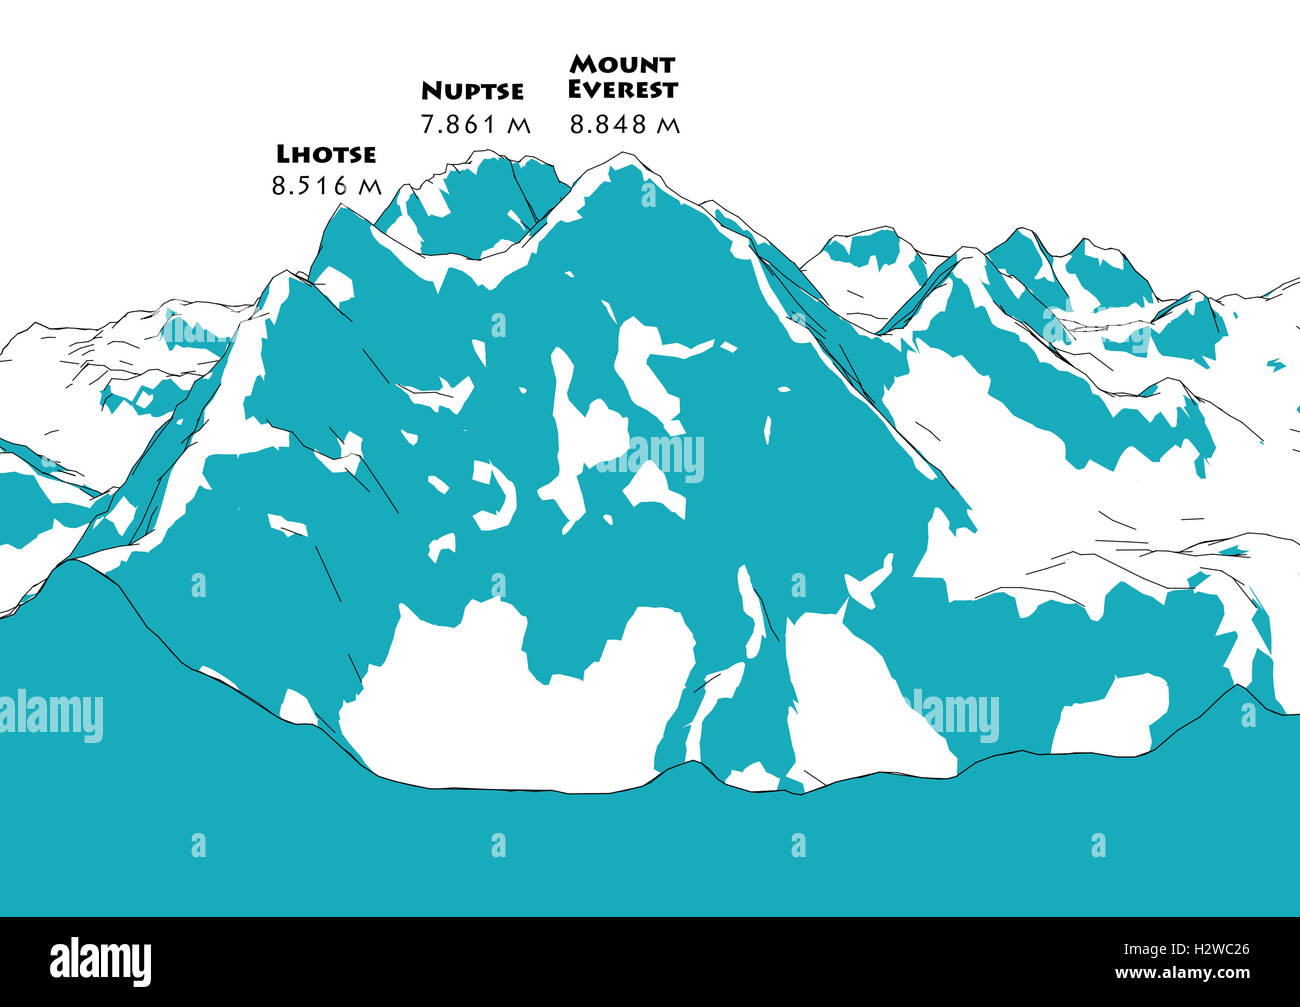 Model of Mount Everest (VGC7G4QSJ) by terrainator